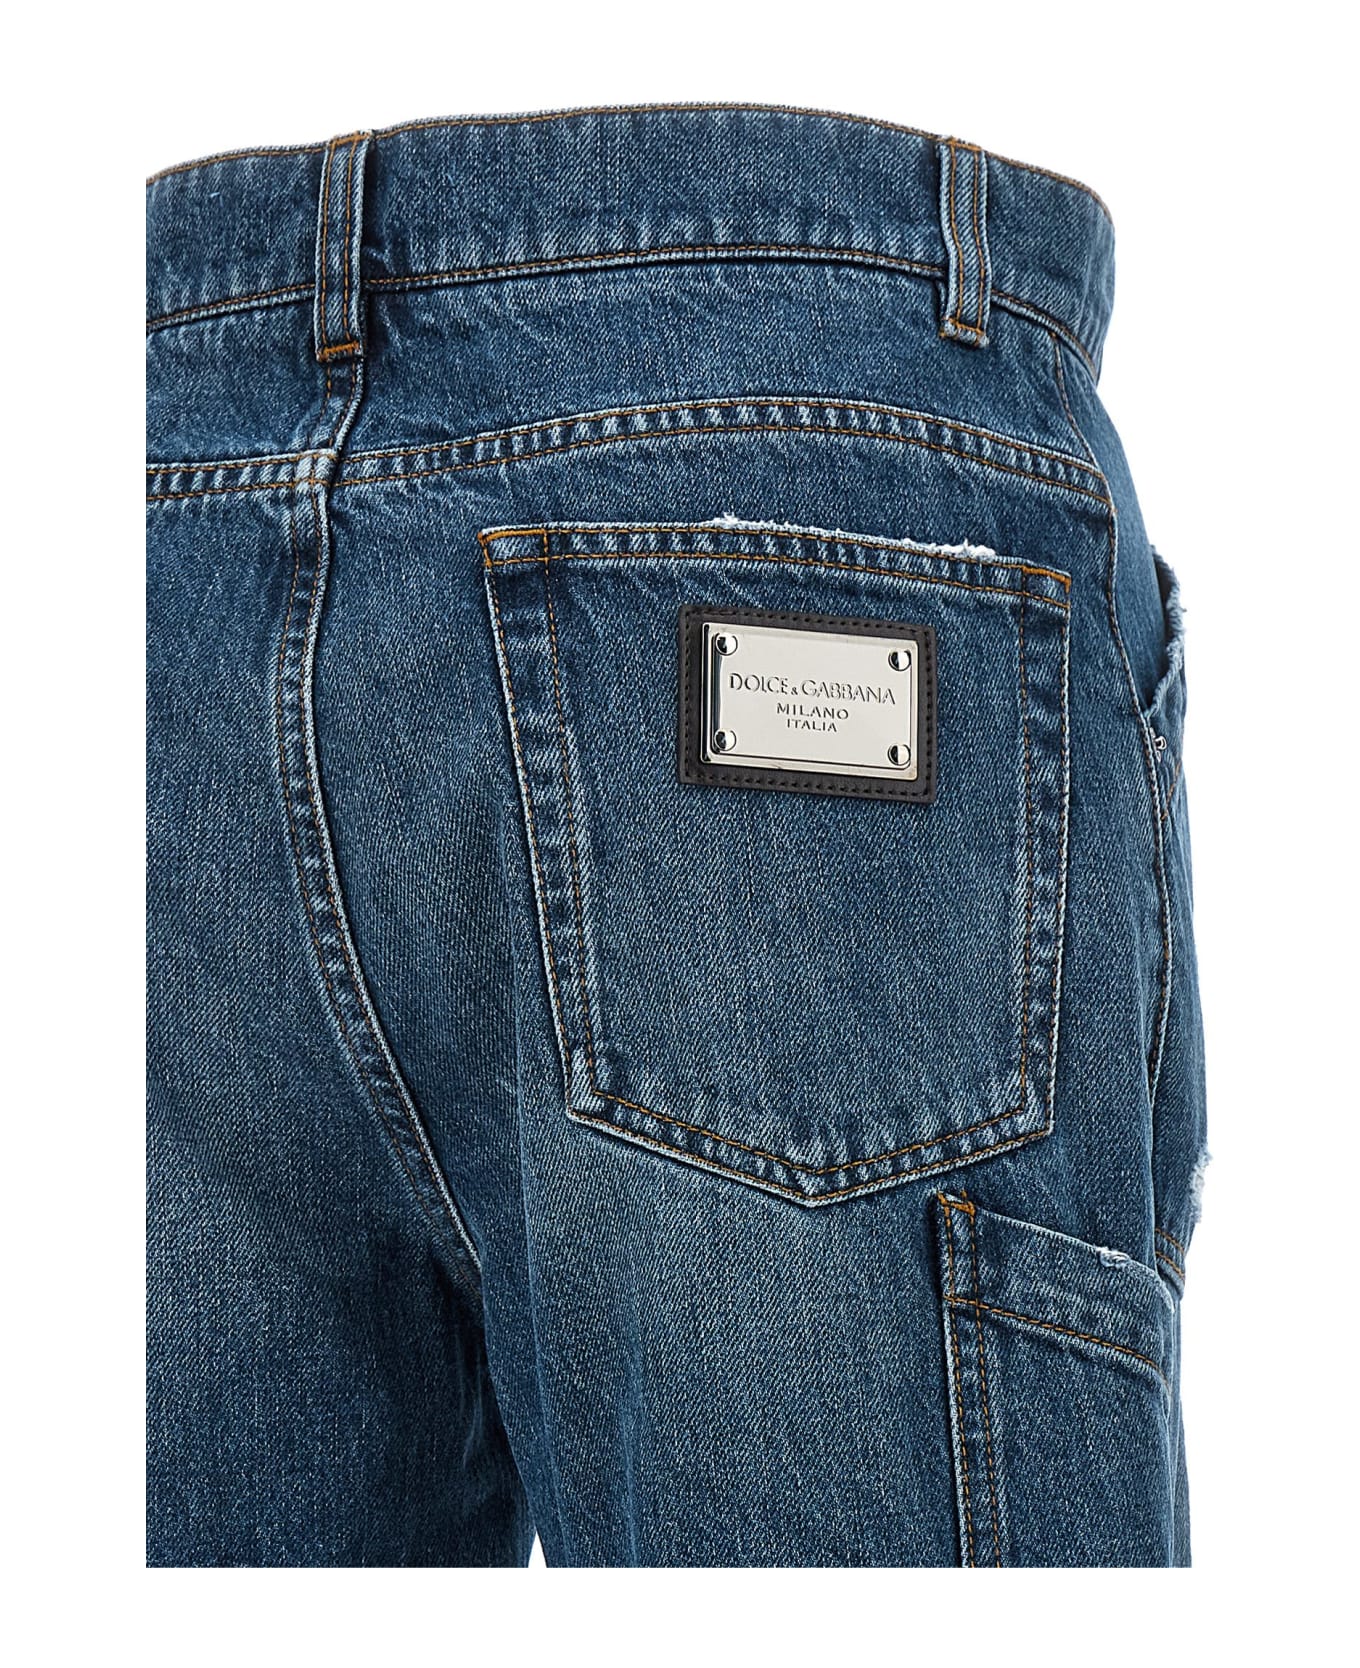 Dolce & Gabbana Cargo Jeans - Blu デニム